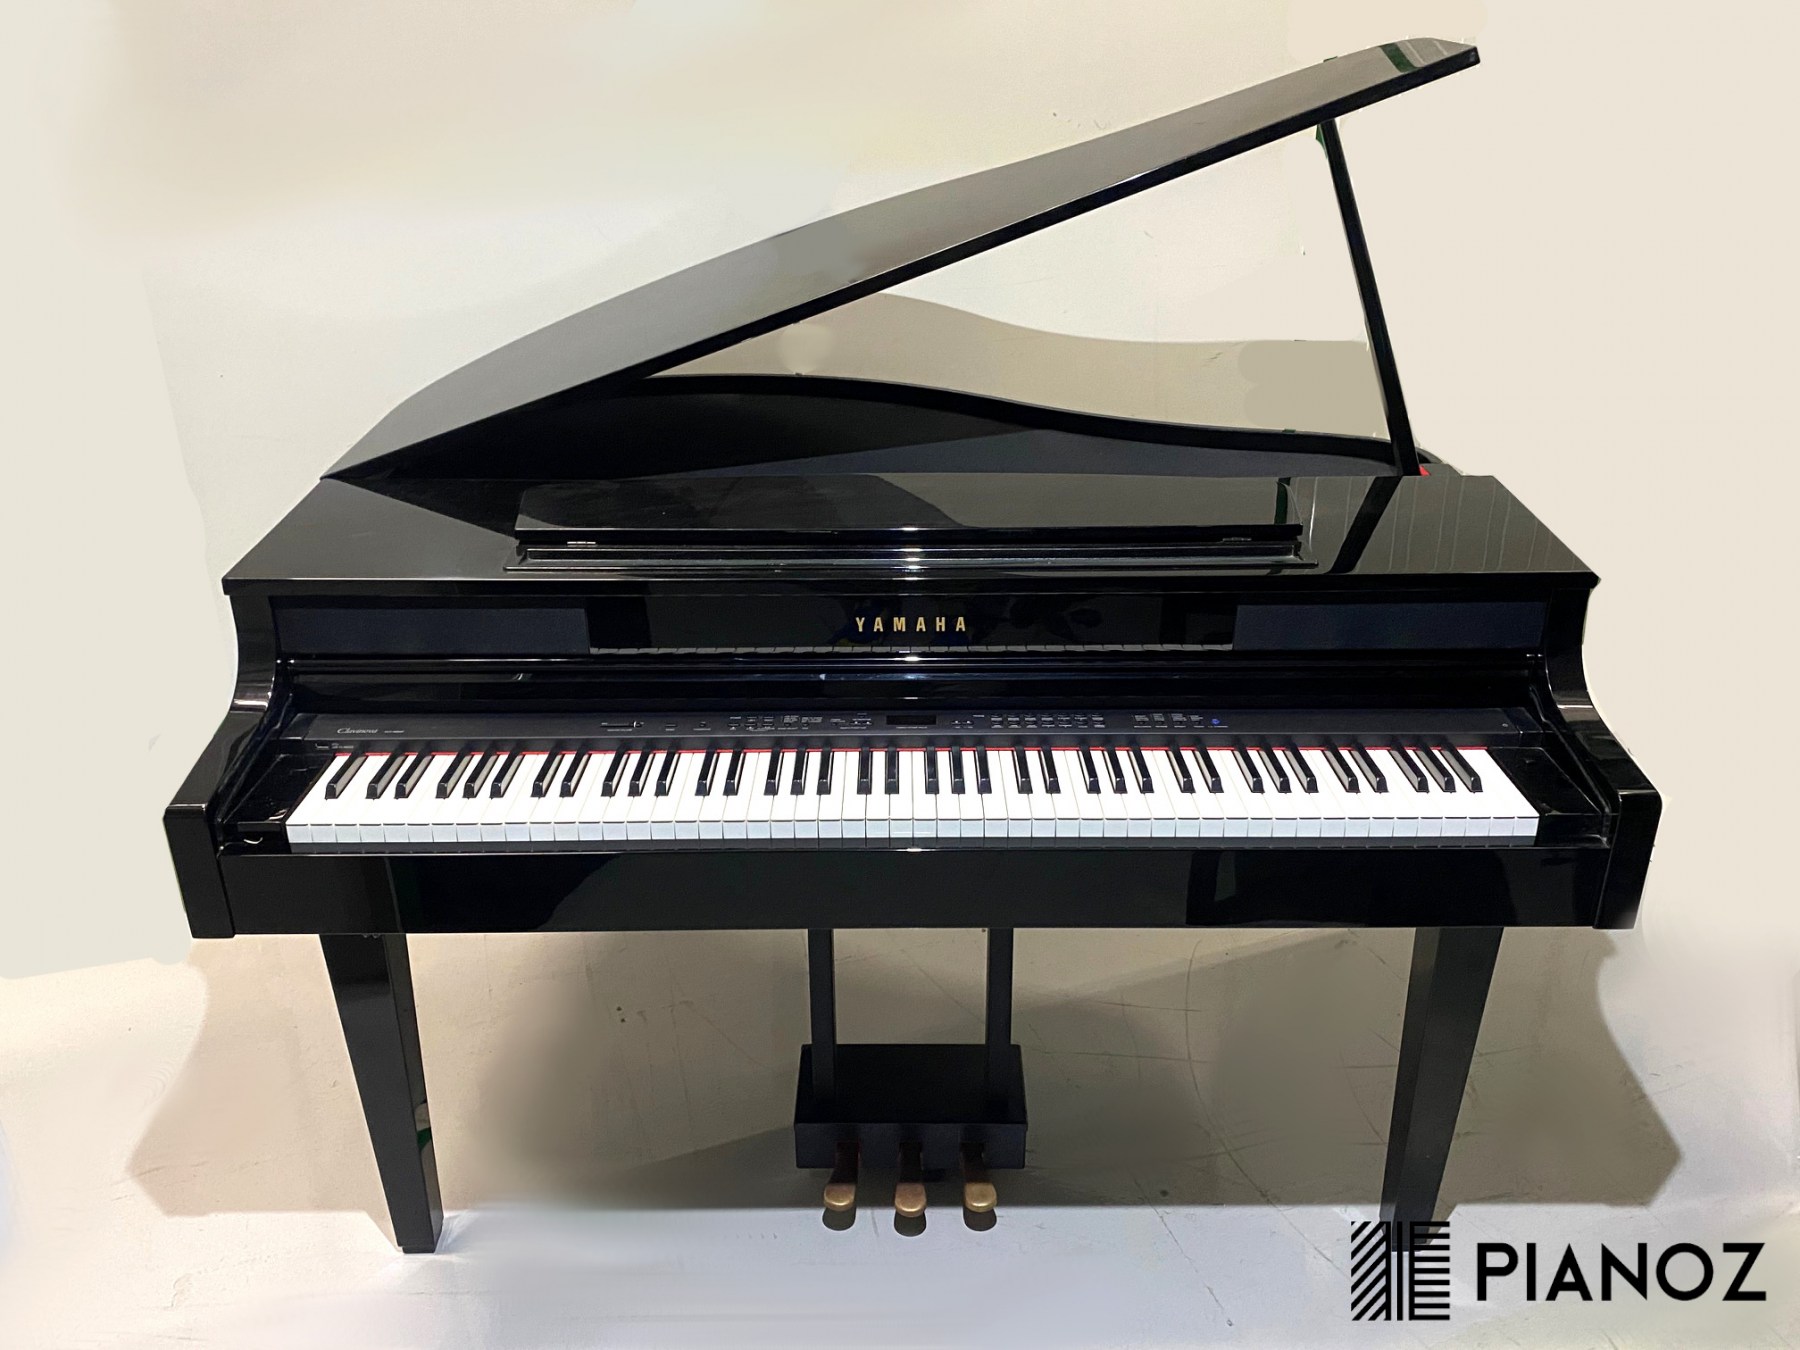 Yamaha 465GP Digital Piano piano for sale in UK